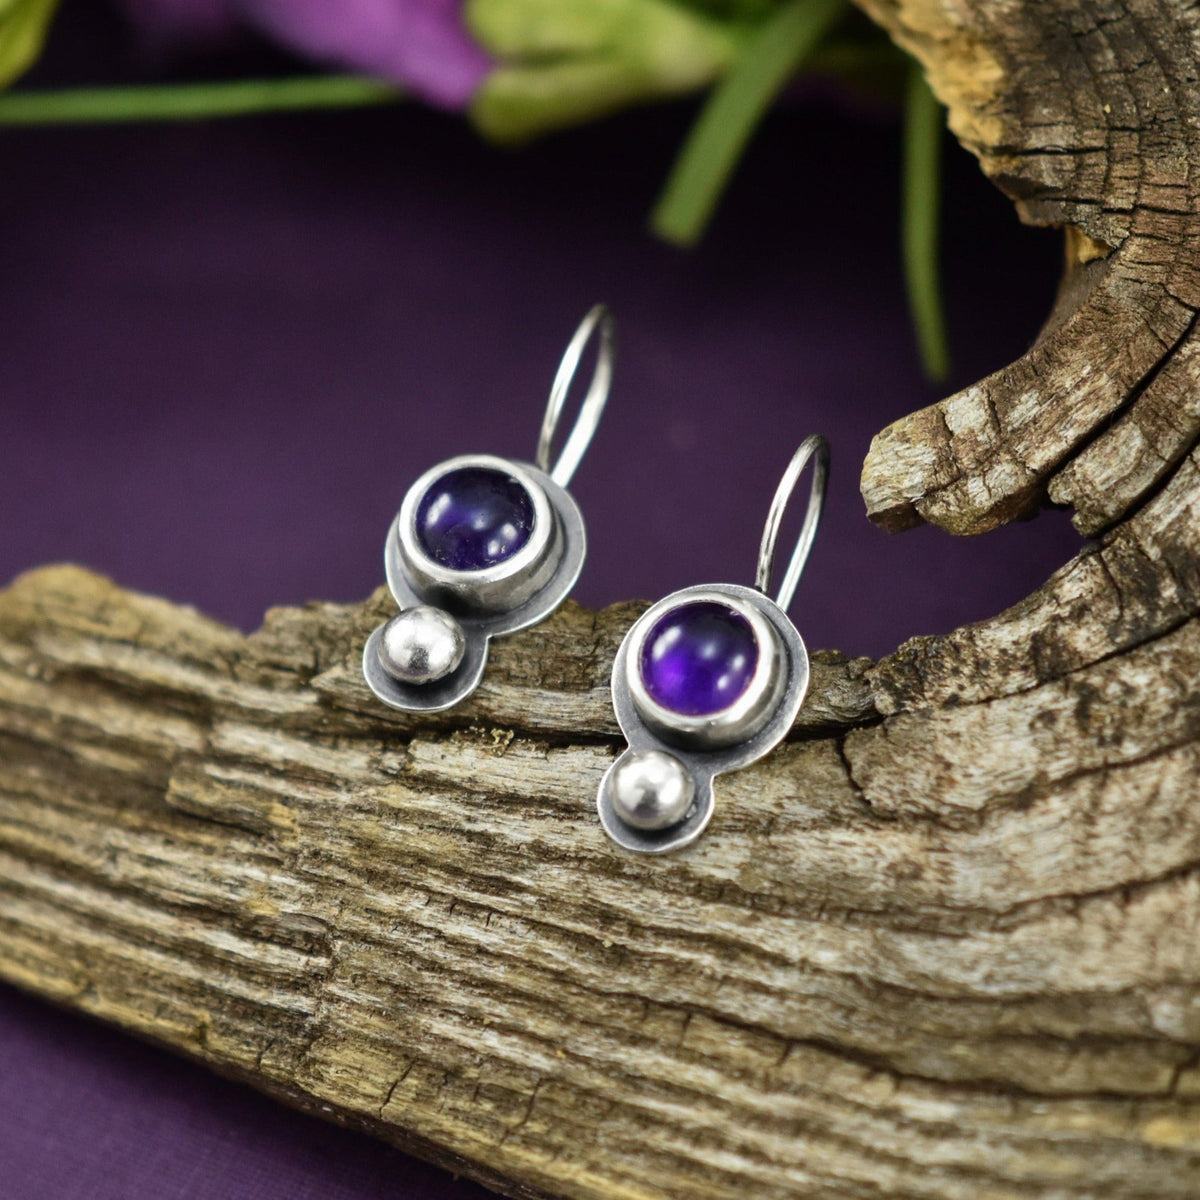 Amethyst Droplet Earrings - Silver Earrings   6823 - handmade by Beth Millner Jewelry